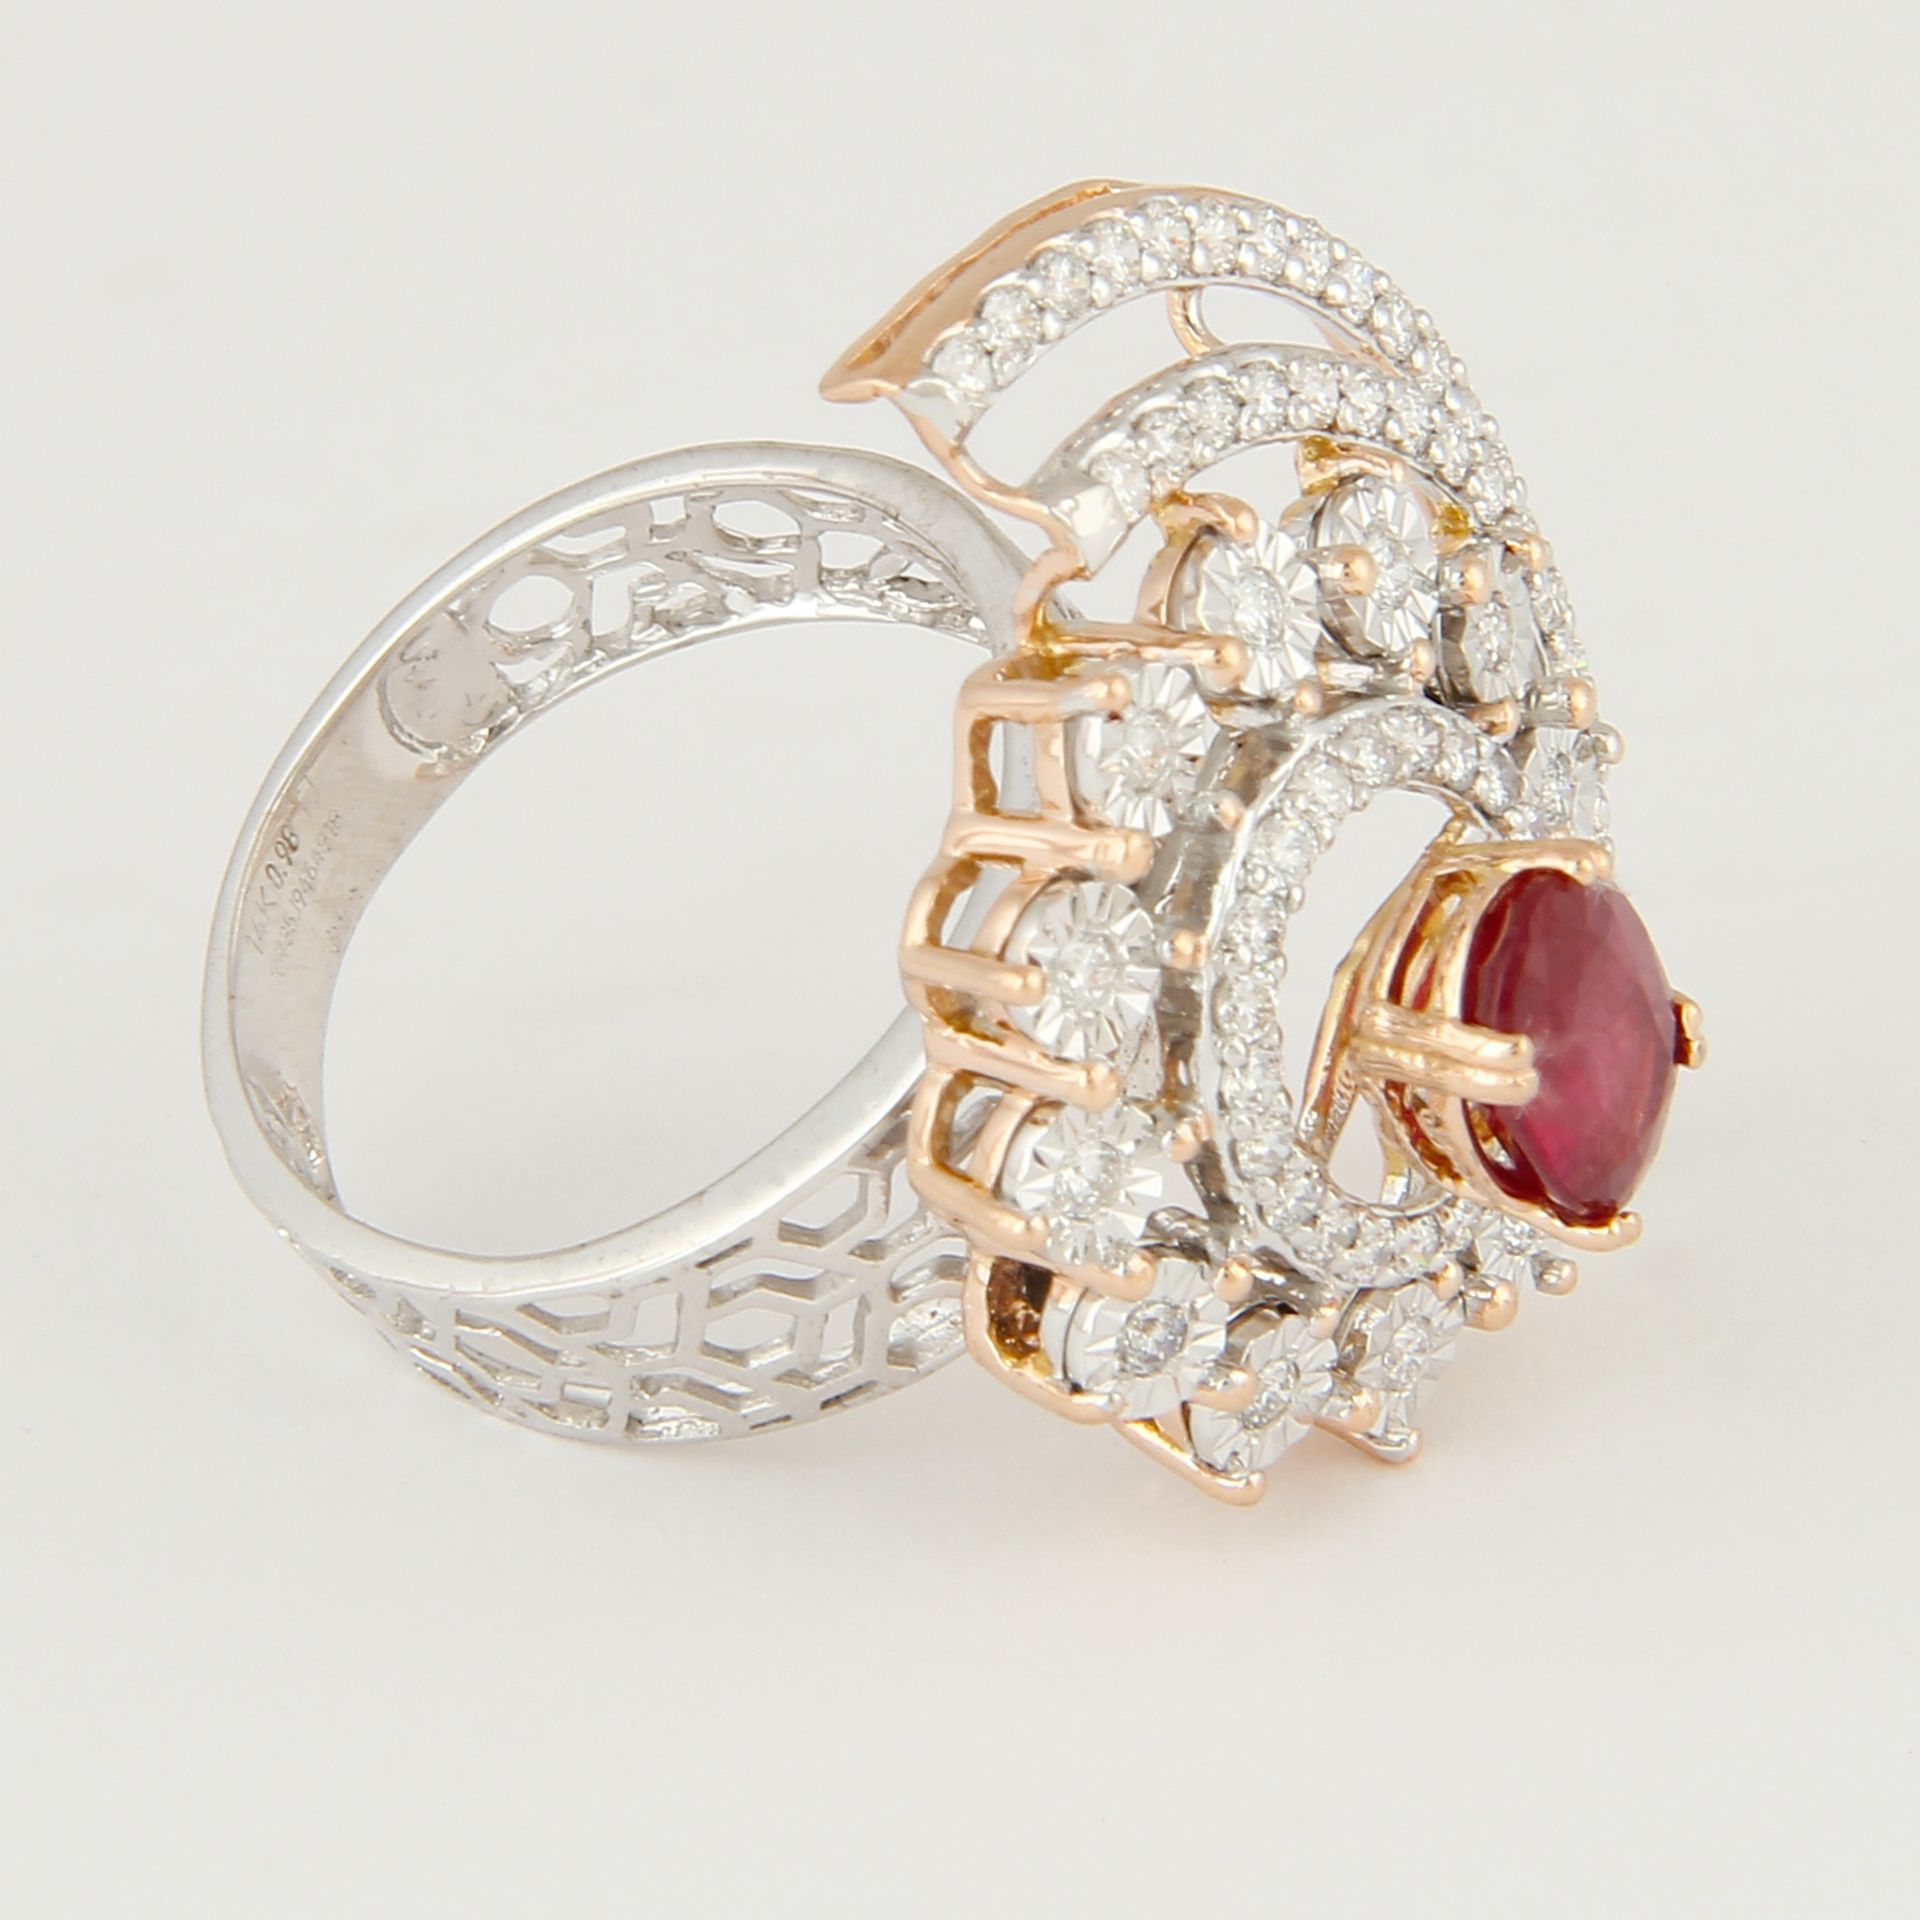 14 K / 585 White Gold & Rose Gold Ruby (GIA Certified) & Diamond Ring - Image 3 of 4